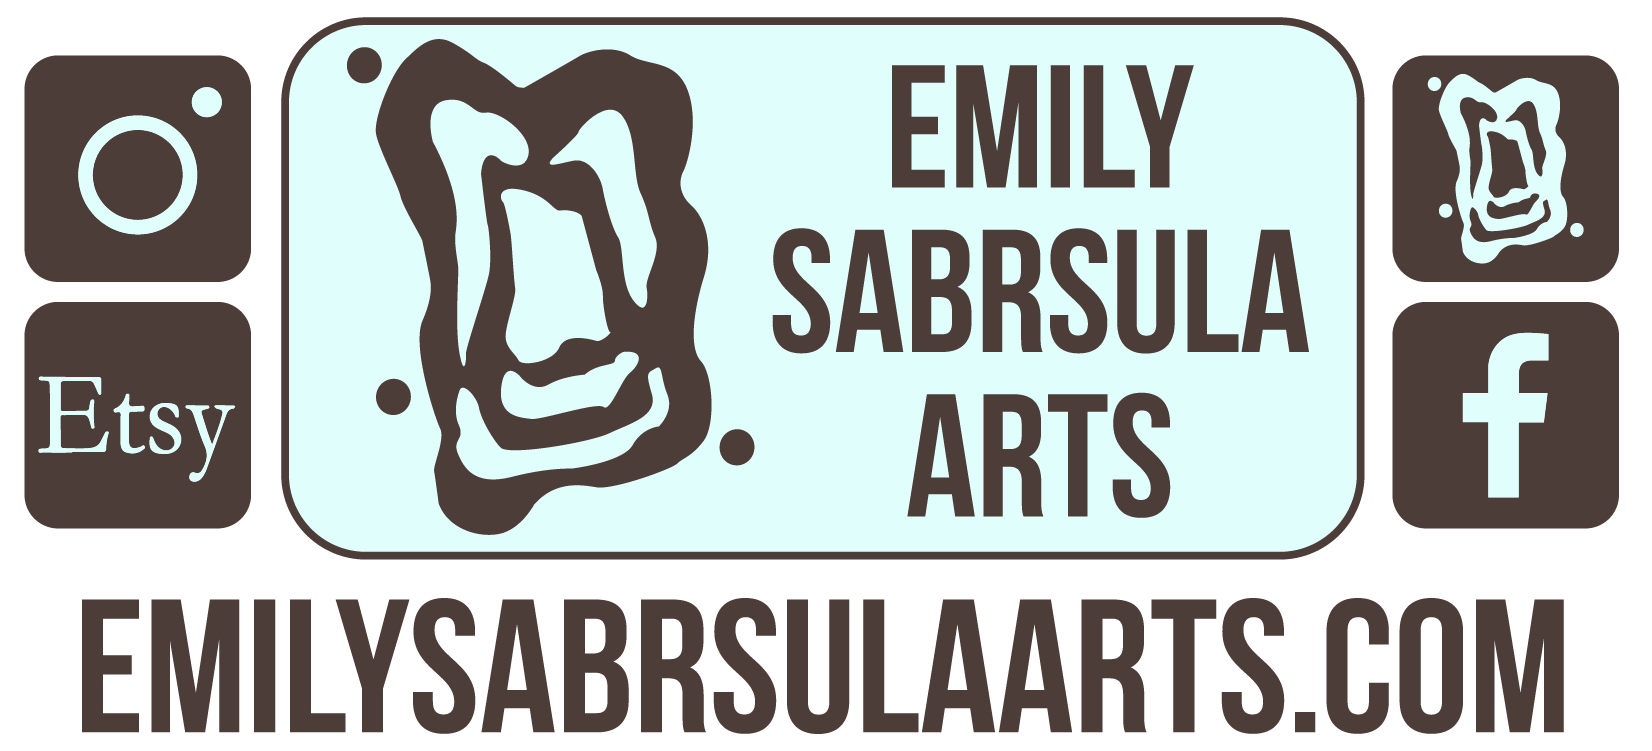 Emily Sabrsula Arts